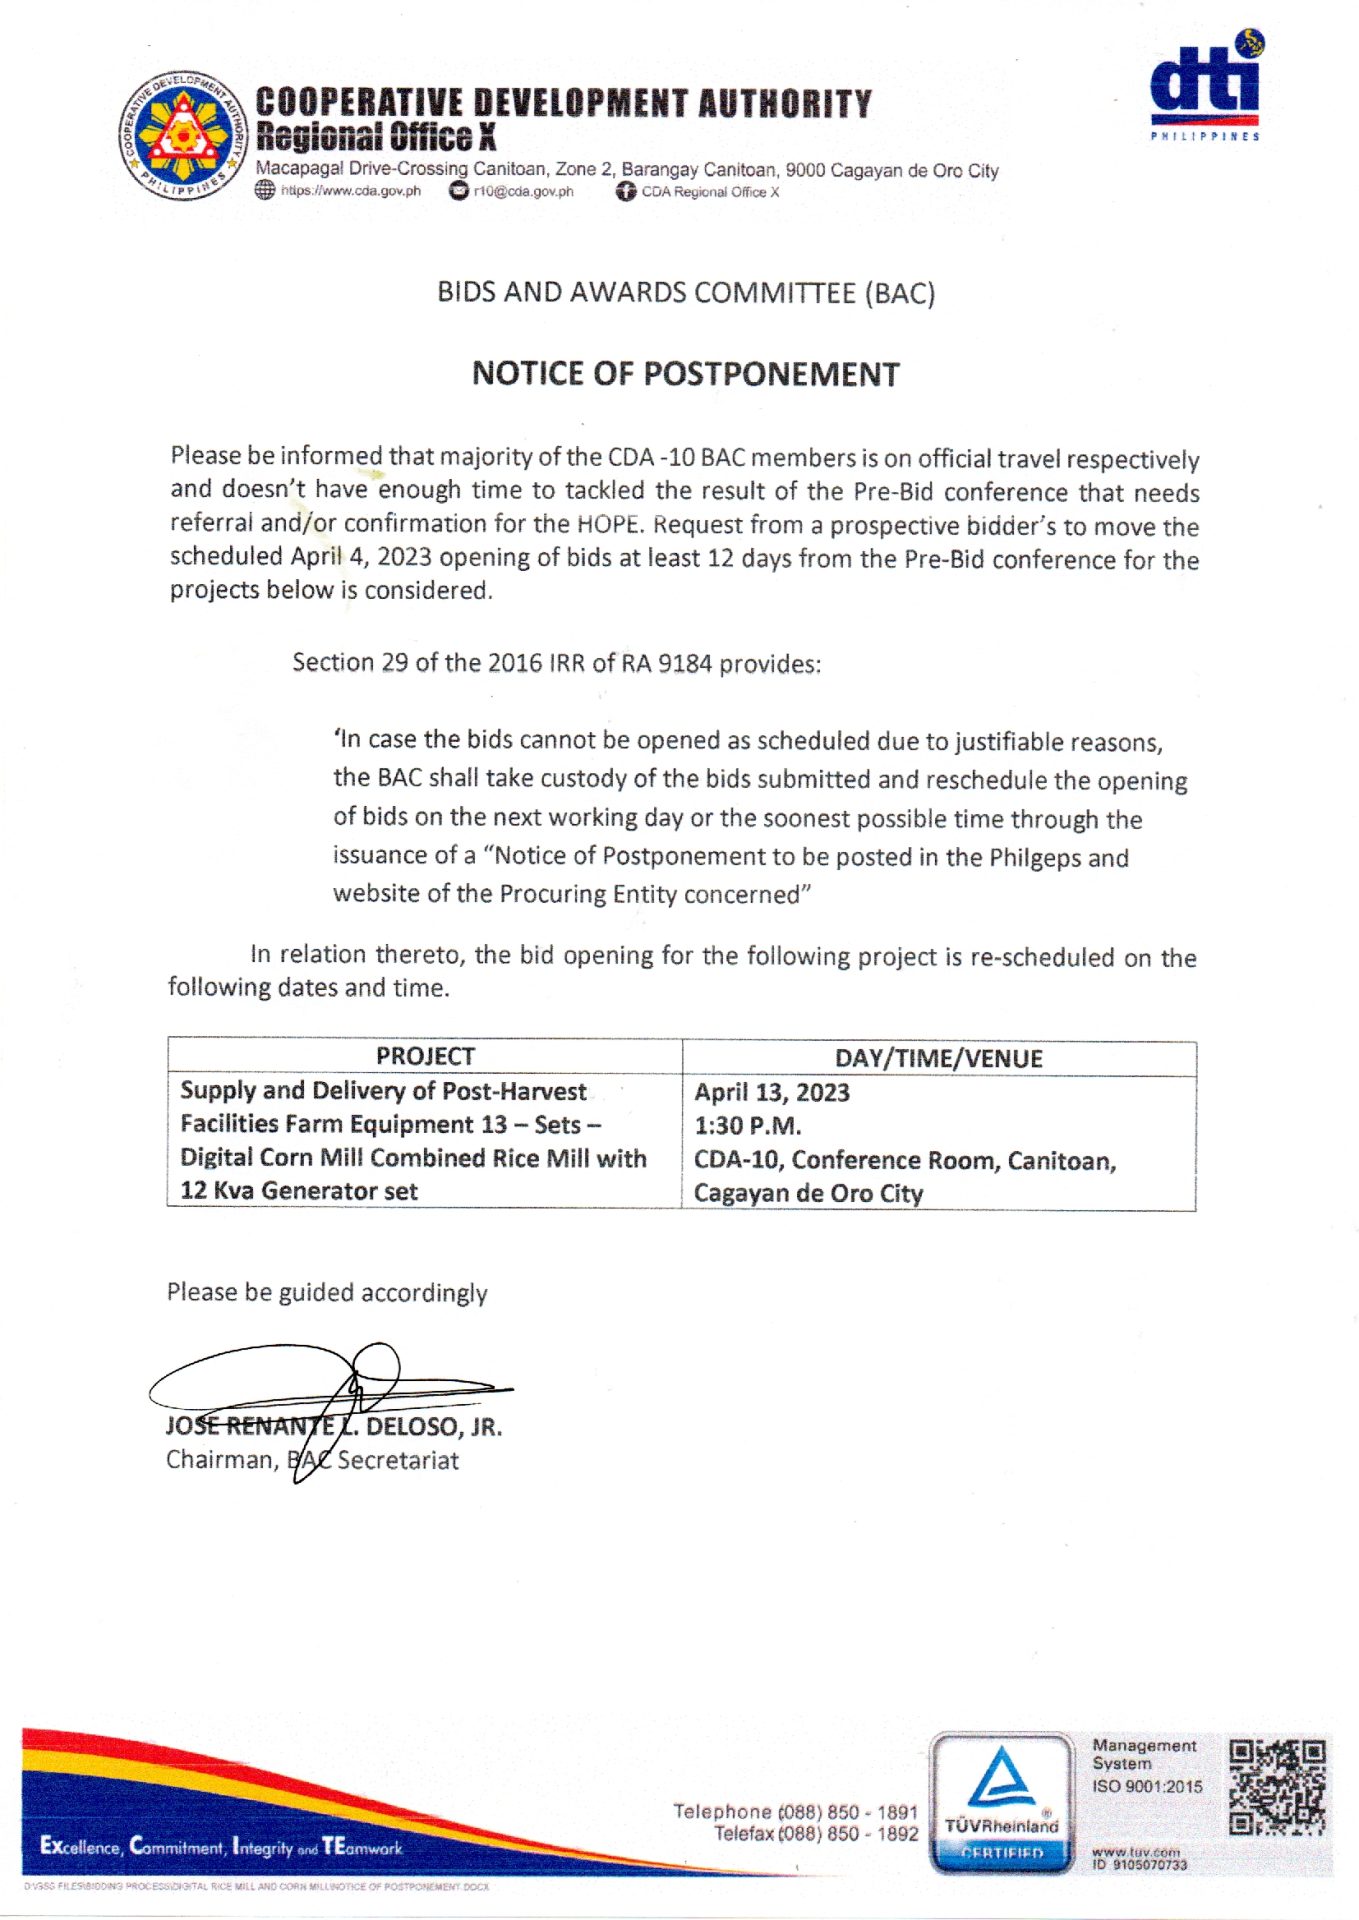 Notice of Postponement